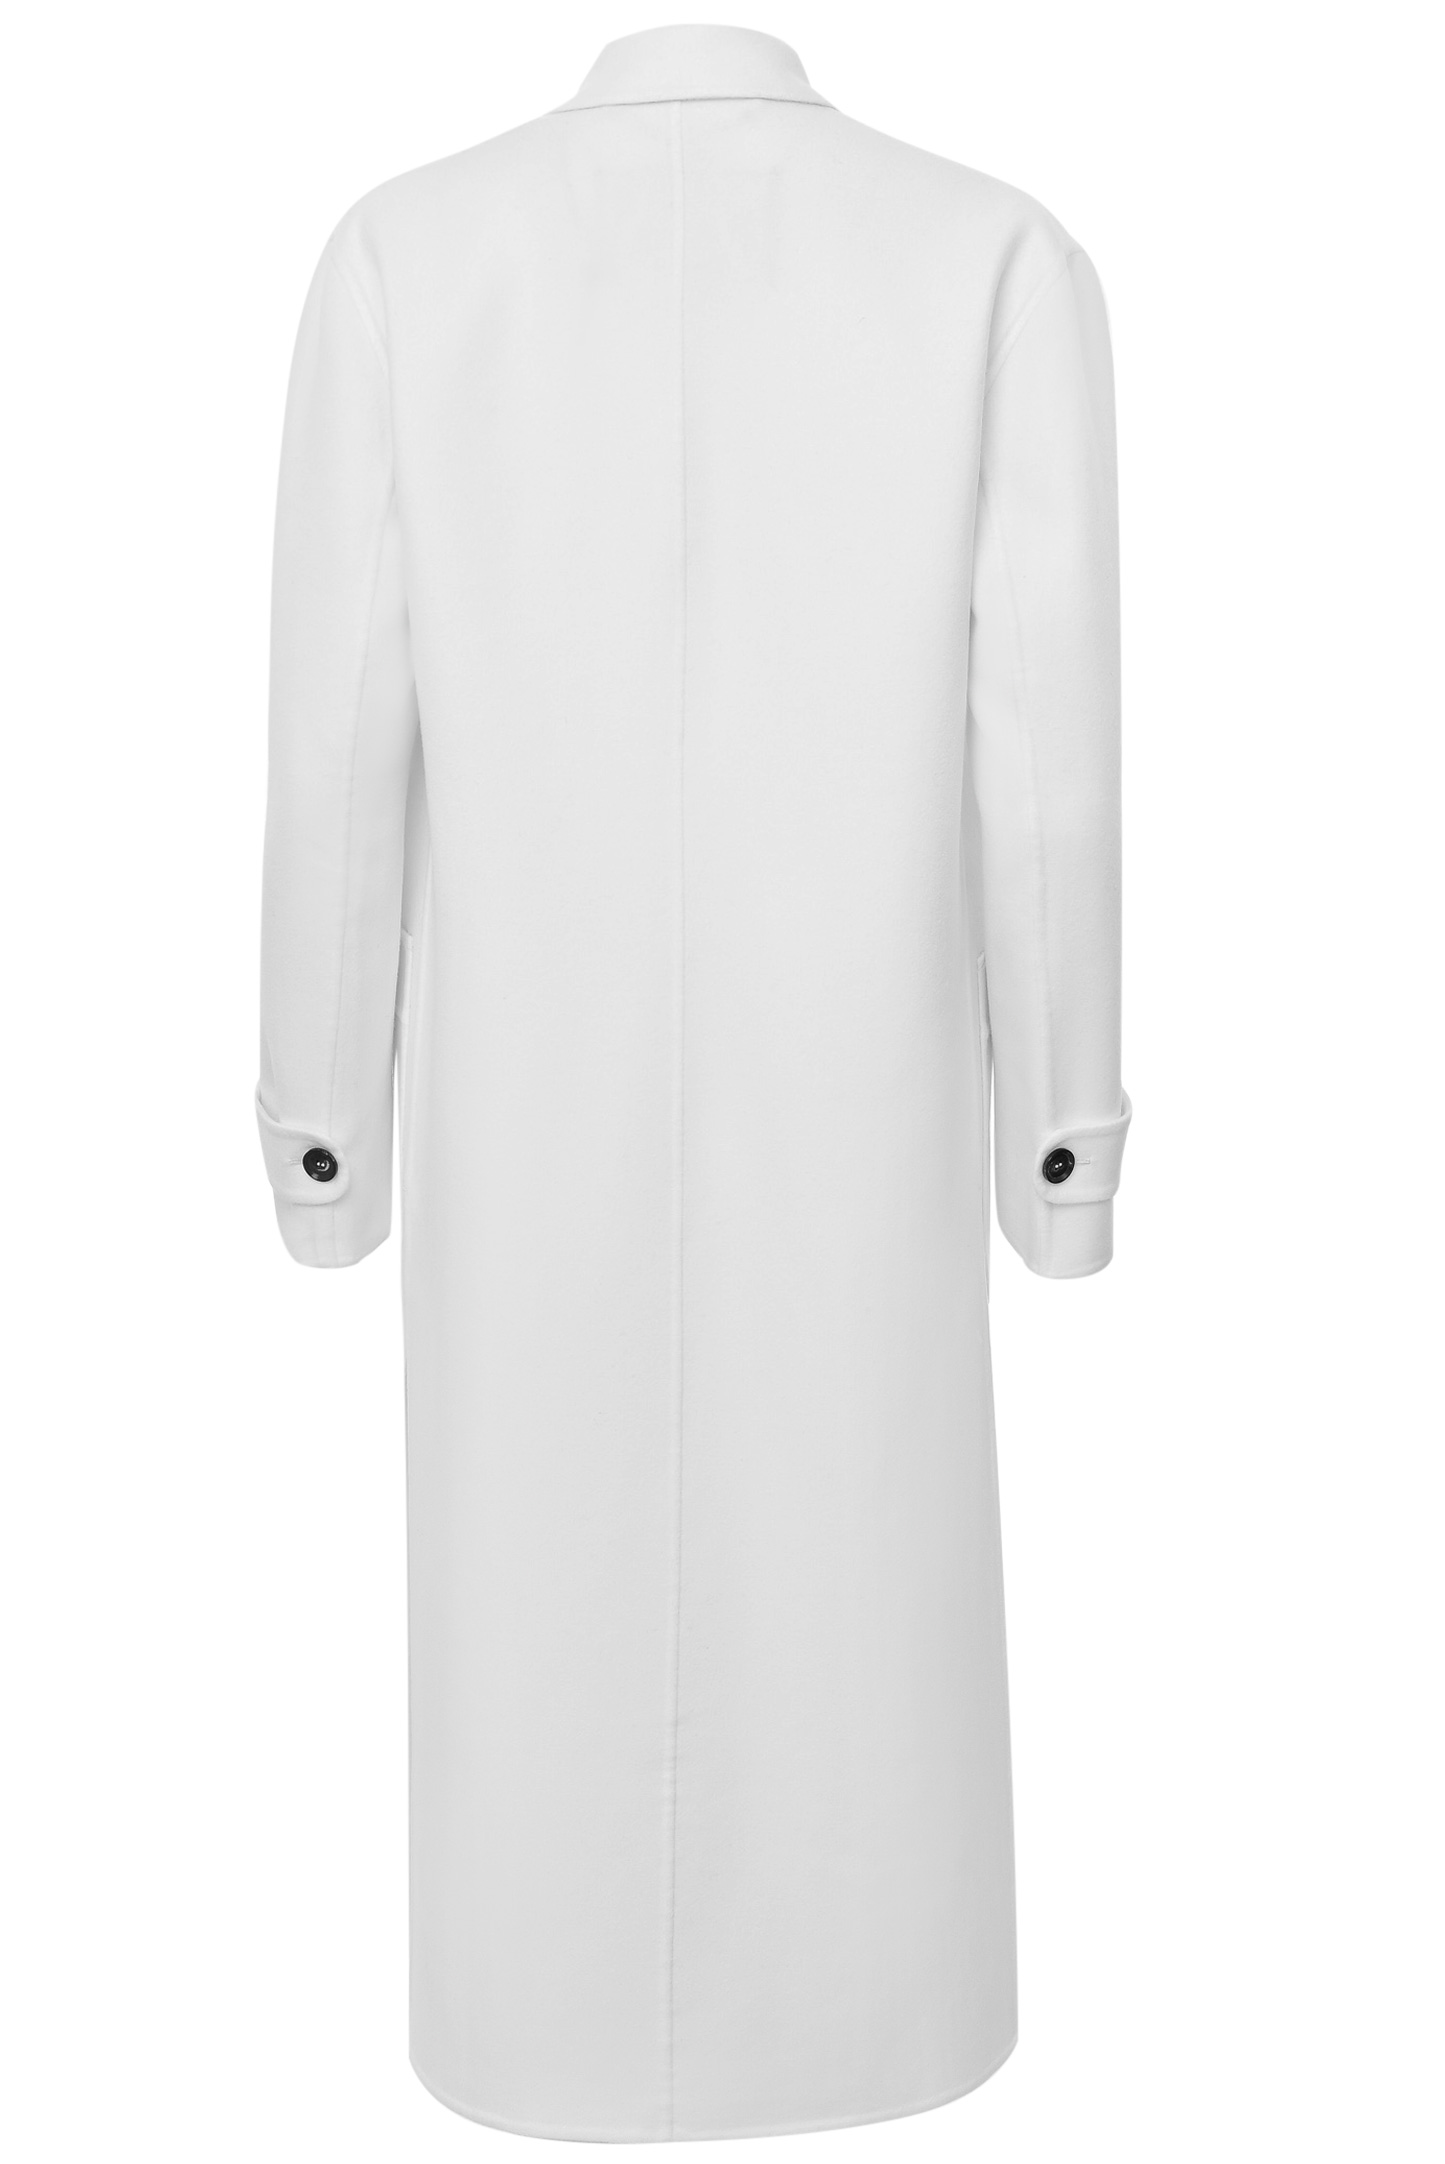 Пальто KITON D52608DK05I, цвет: Белый, Женский